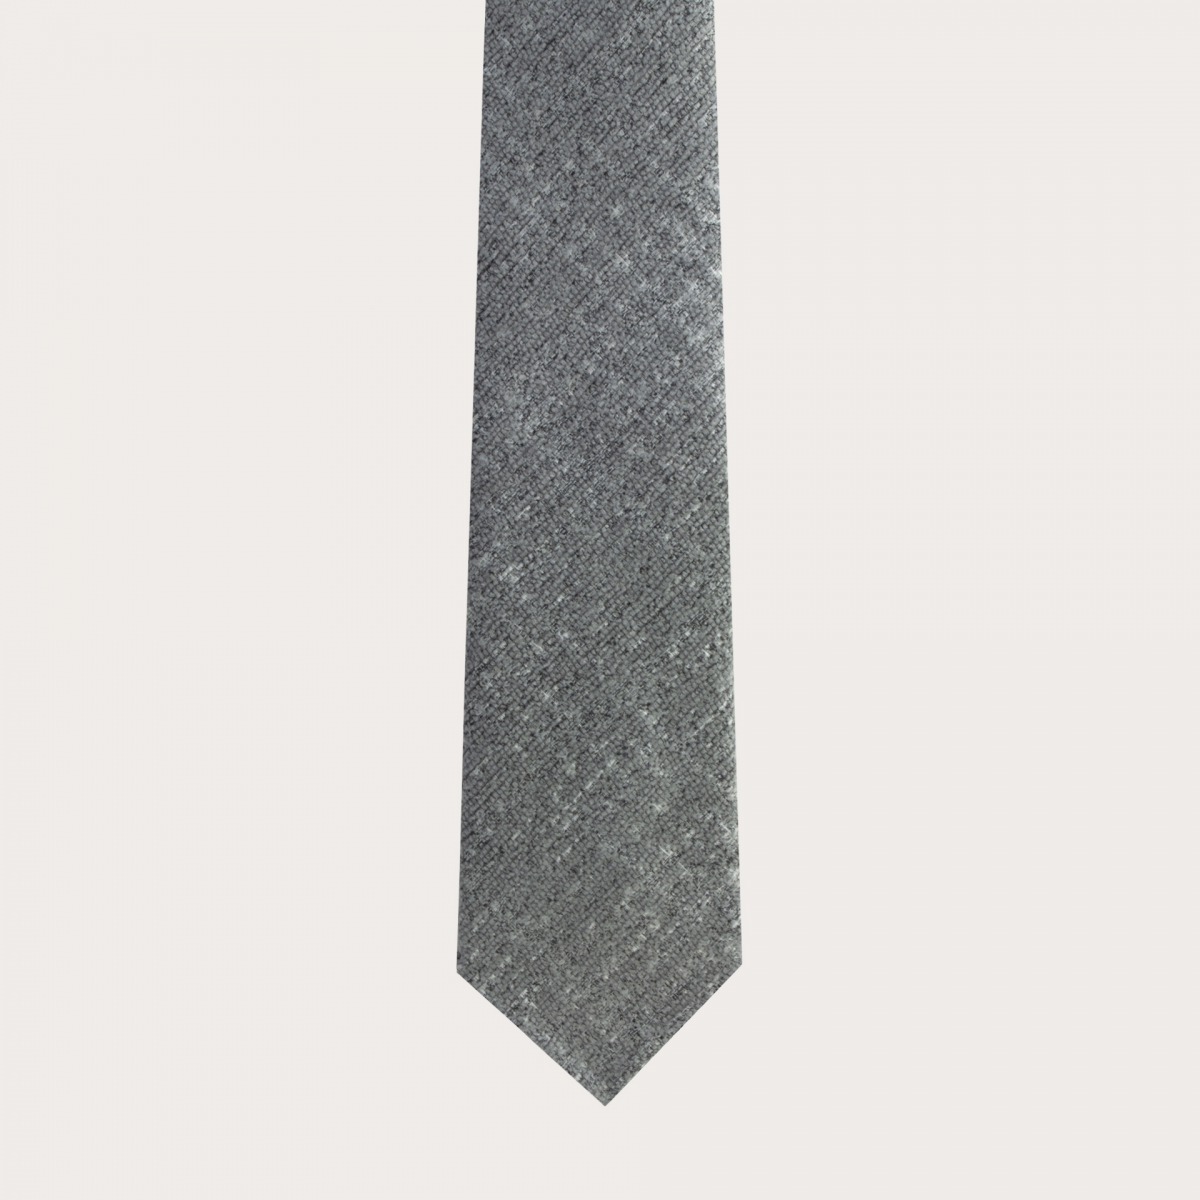 Ungefütterte Krawatte tartanmuster grau